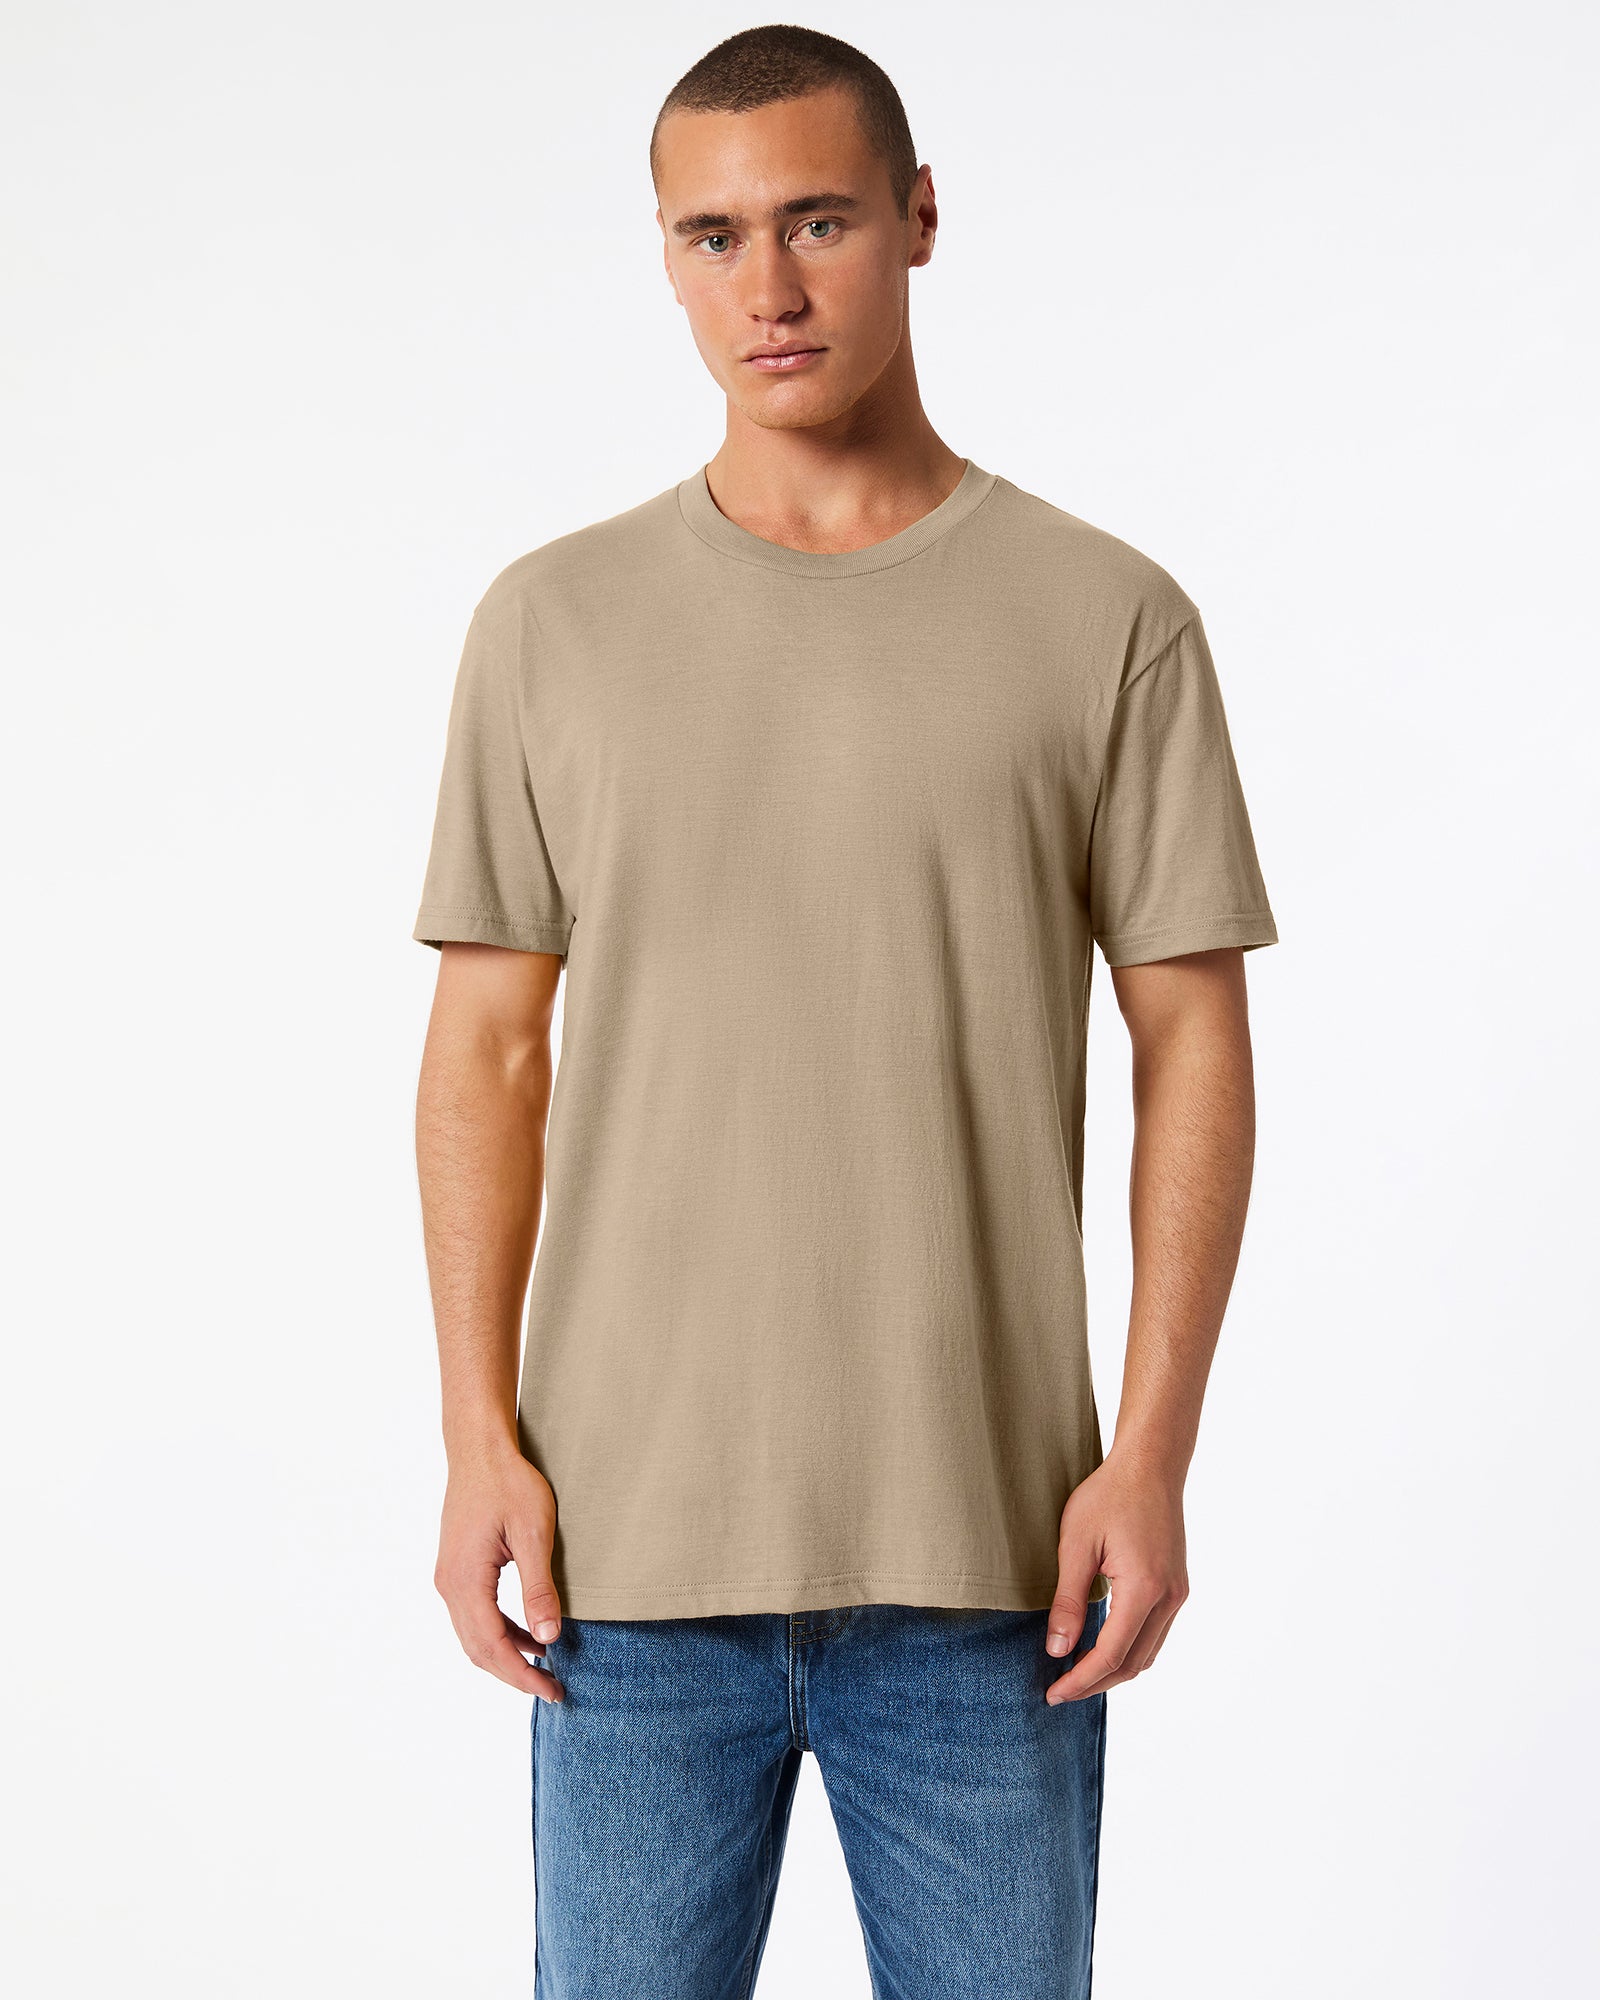 CVC Unisex Short Sleeve T-Shirt - Heather Bone